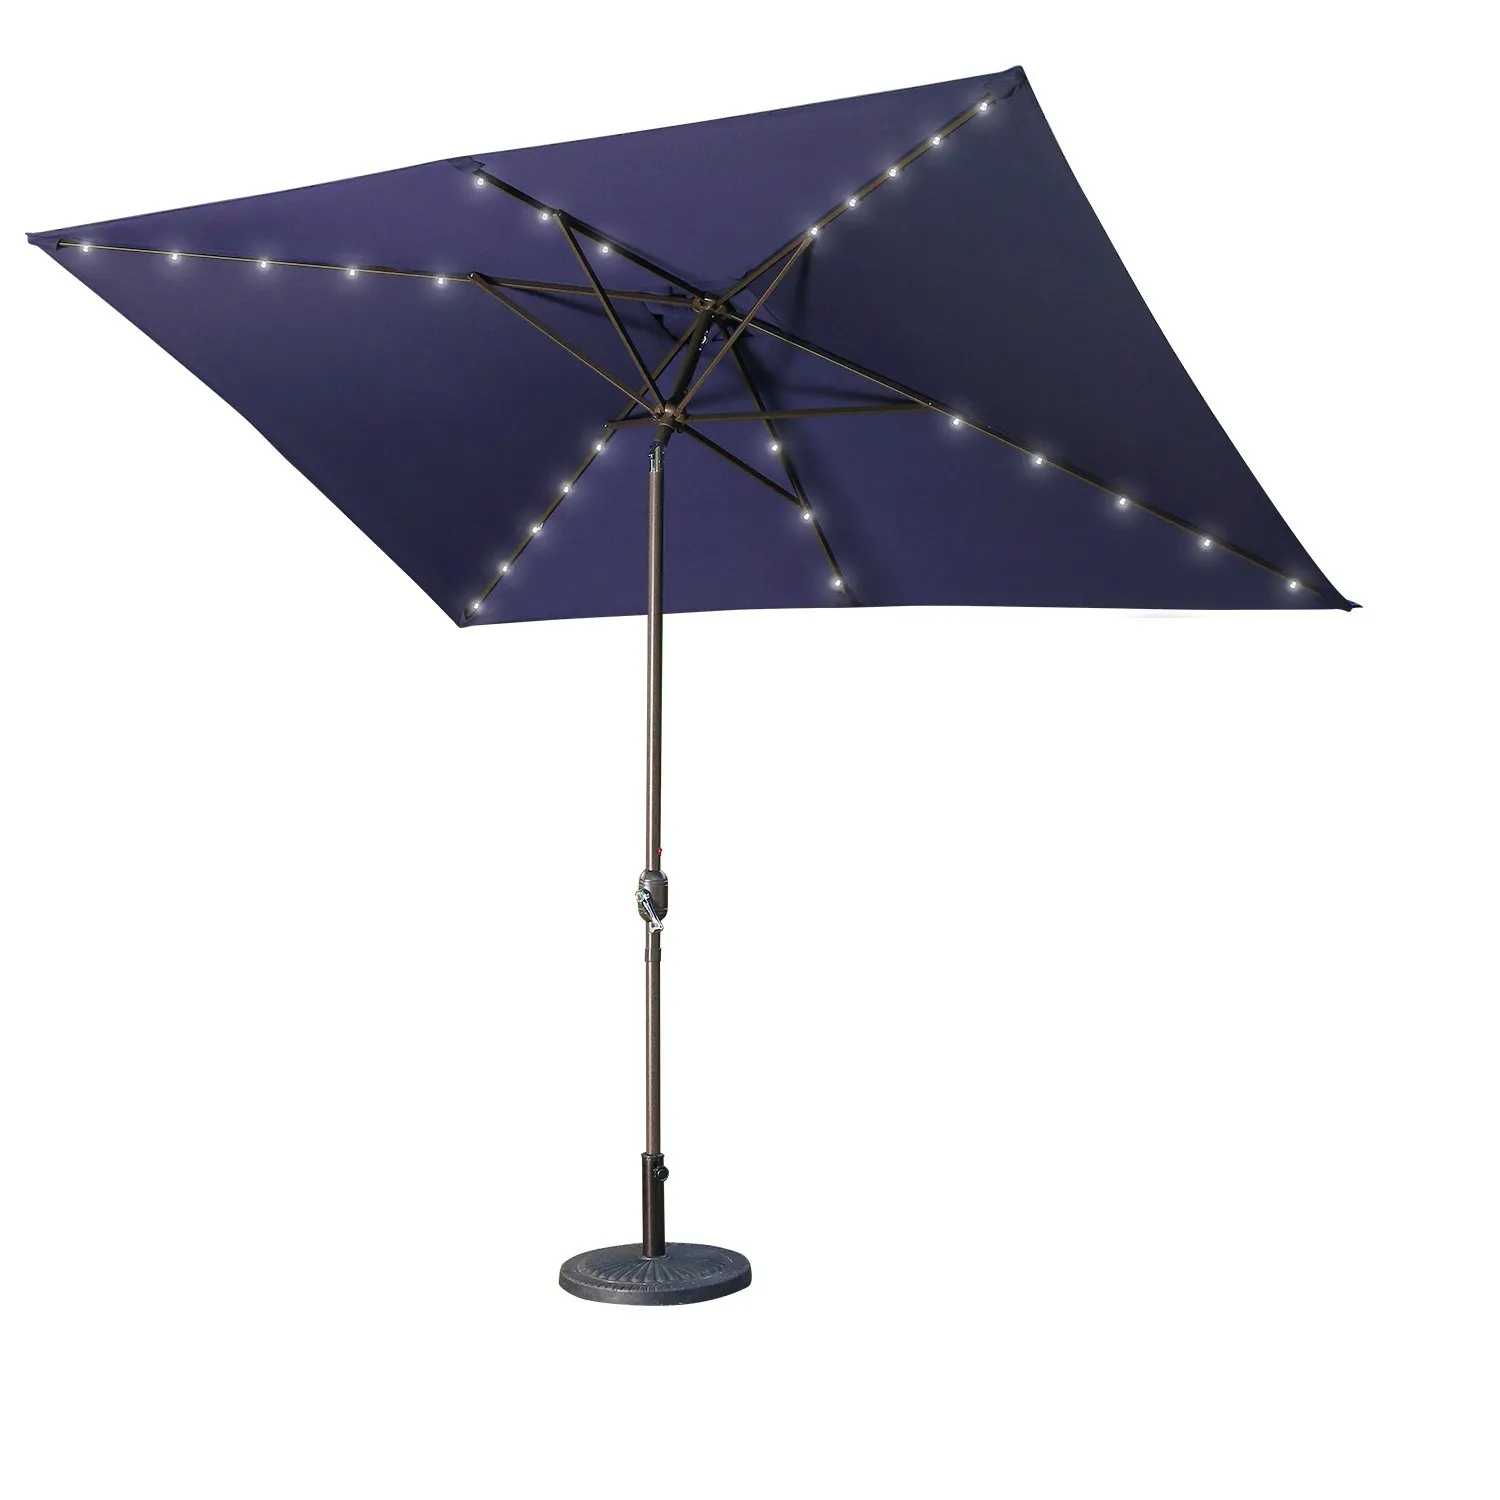 CASAINC 10Ft Rectangular Outdoor Umbrella with 26 LED Lights in Navy Blue